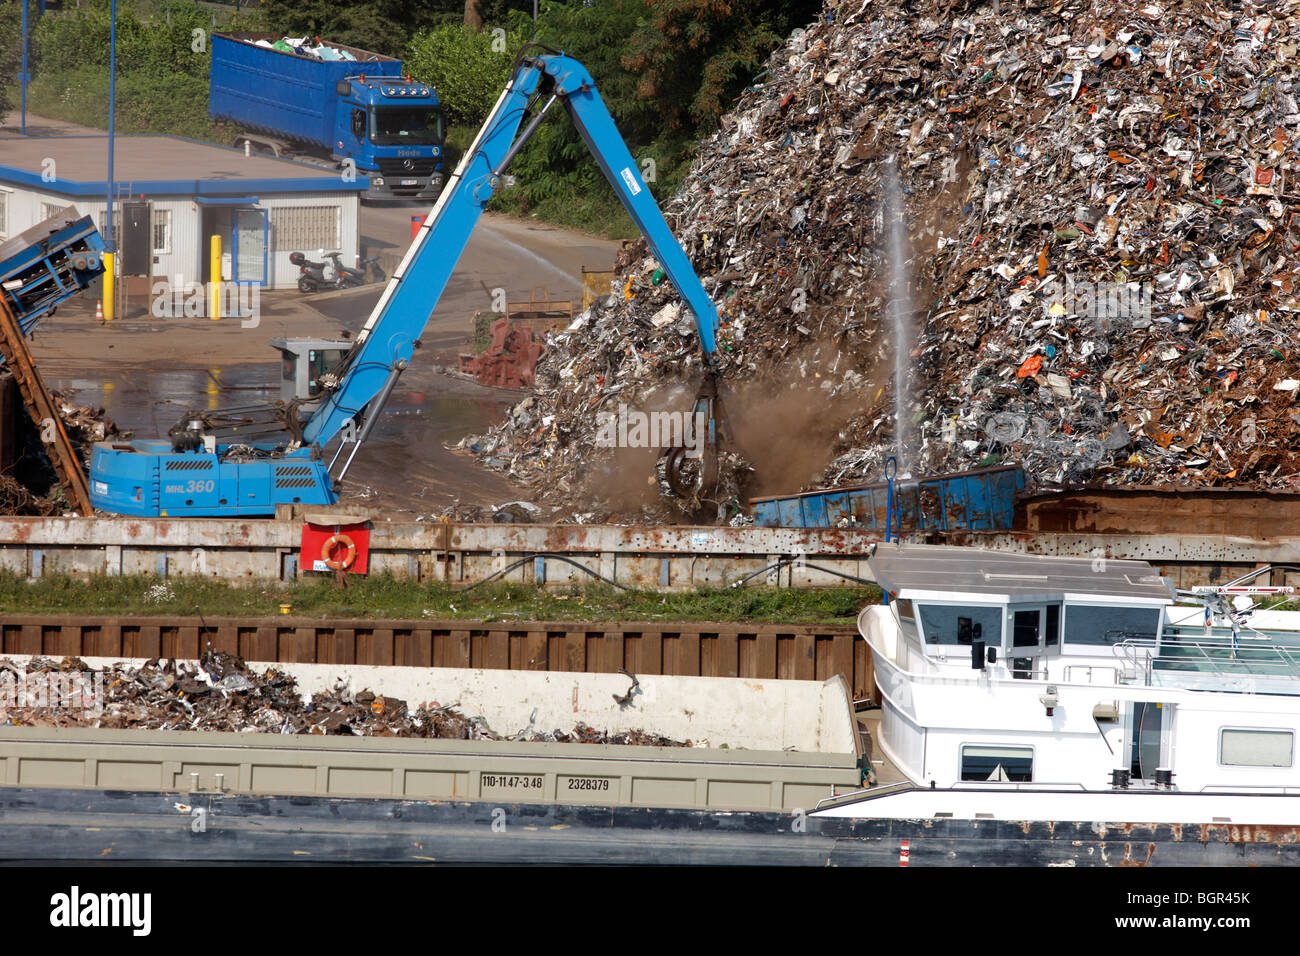 loading scrap to melt down, Gelsenkirchen, NRW, Germany Stock Photo